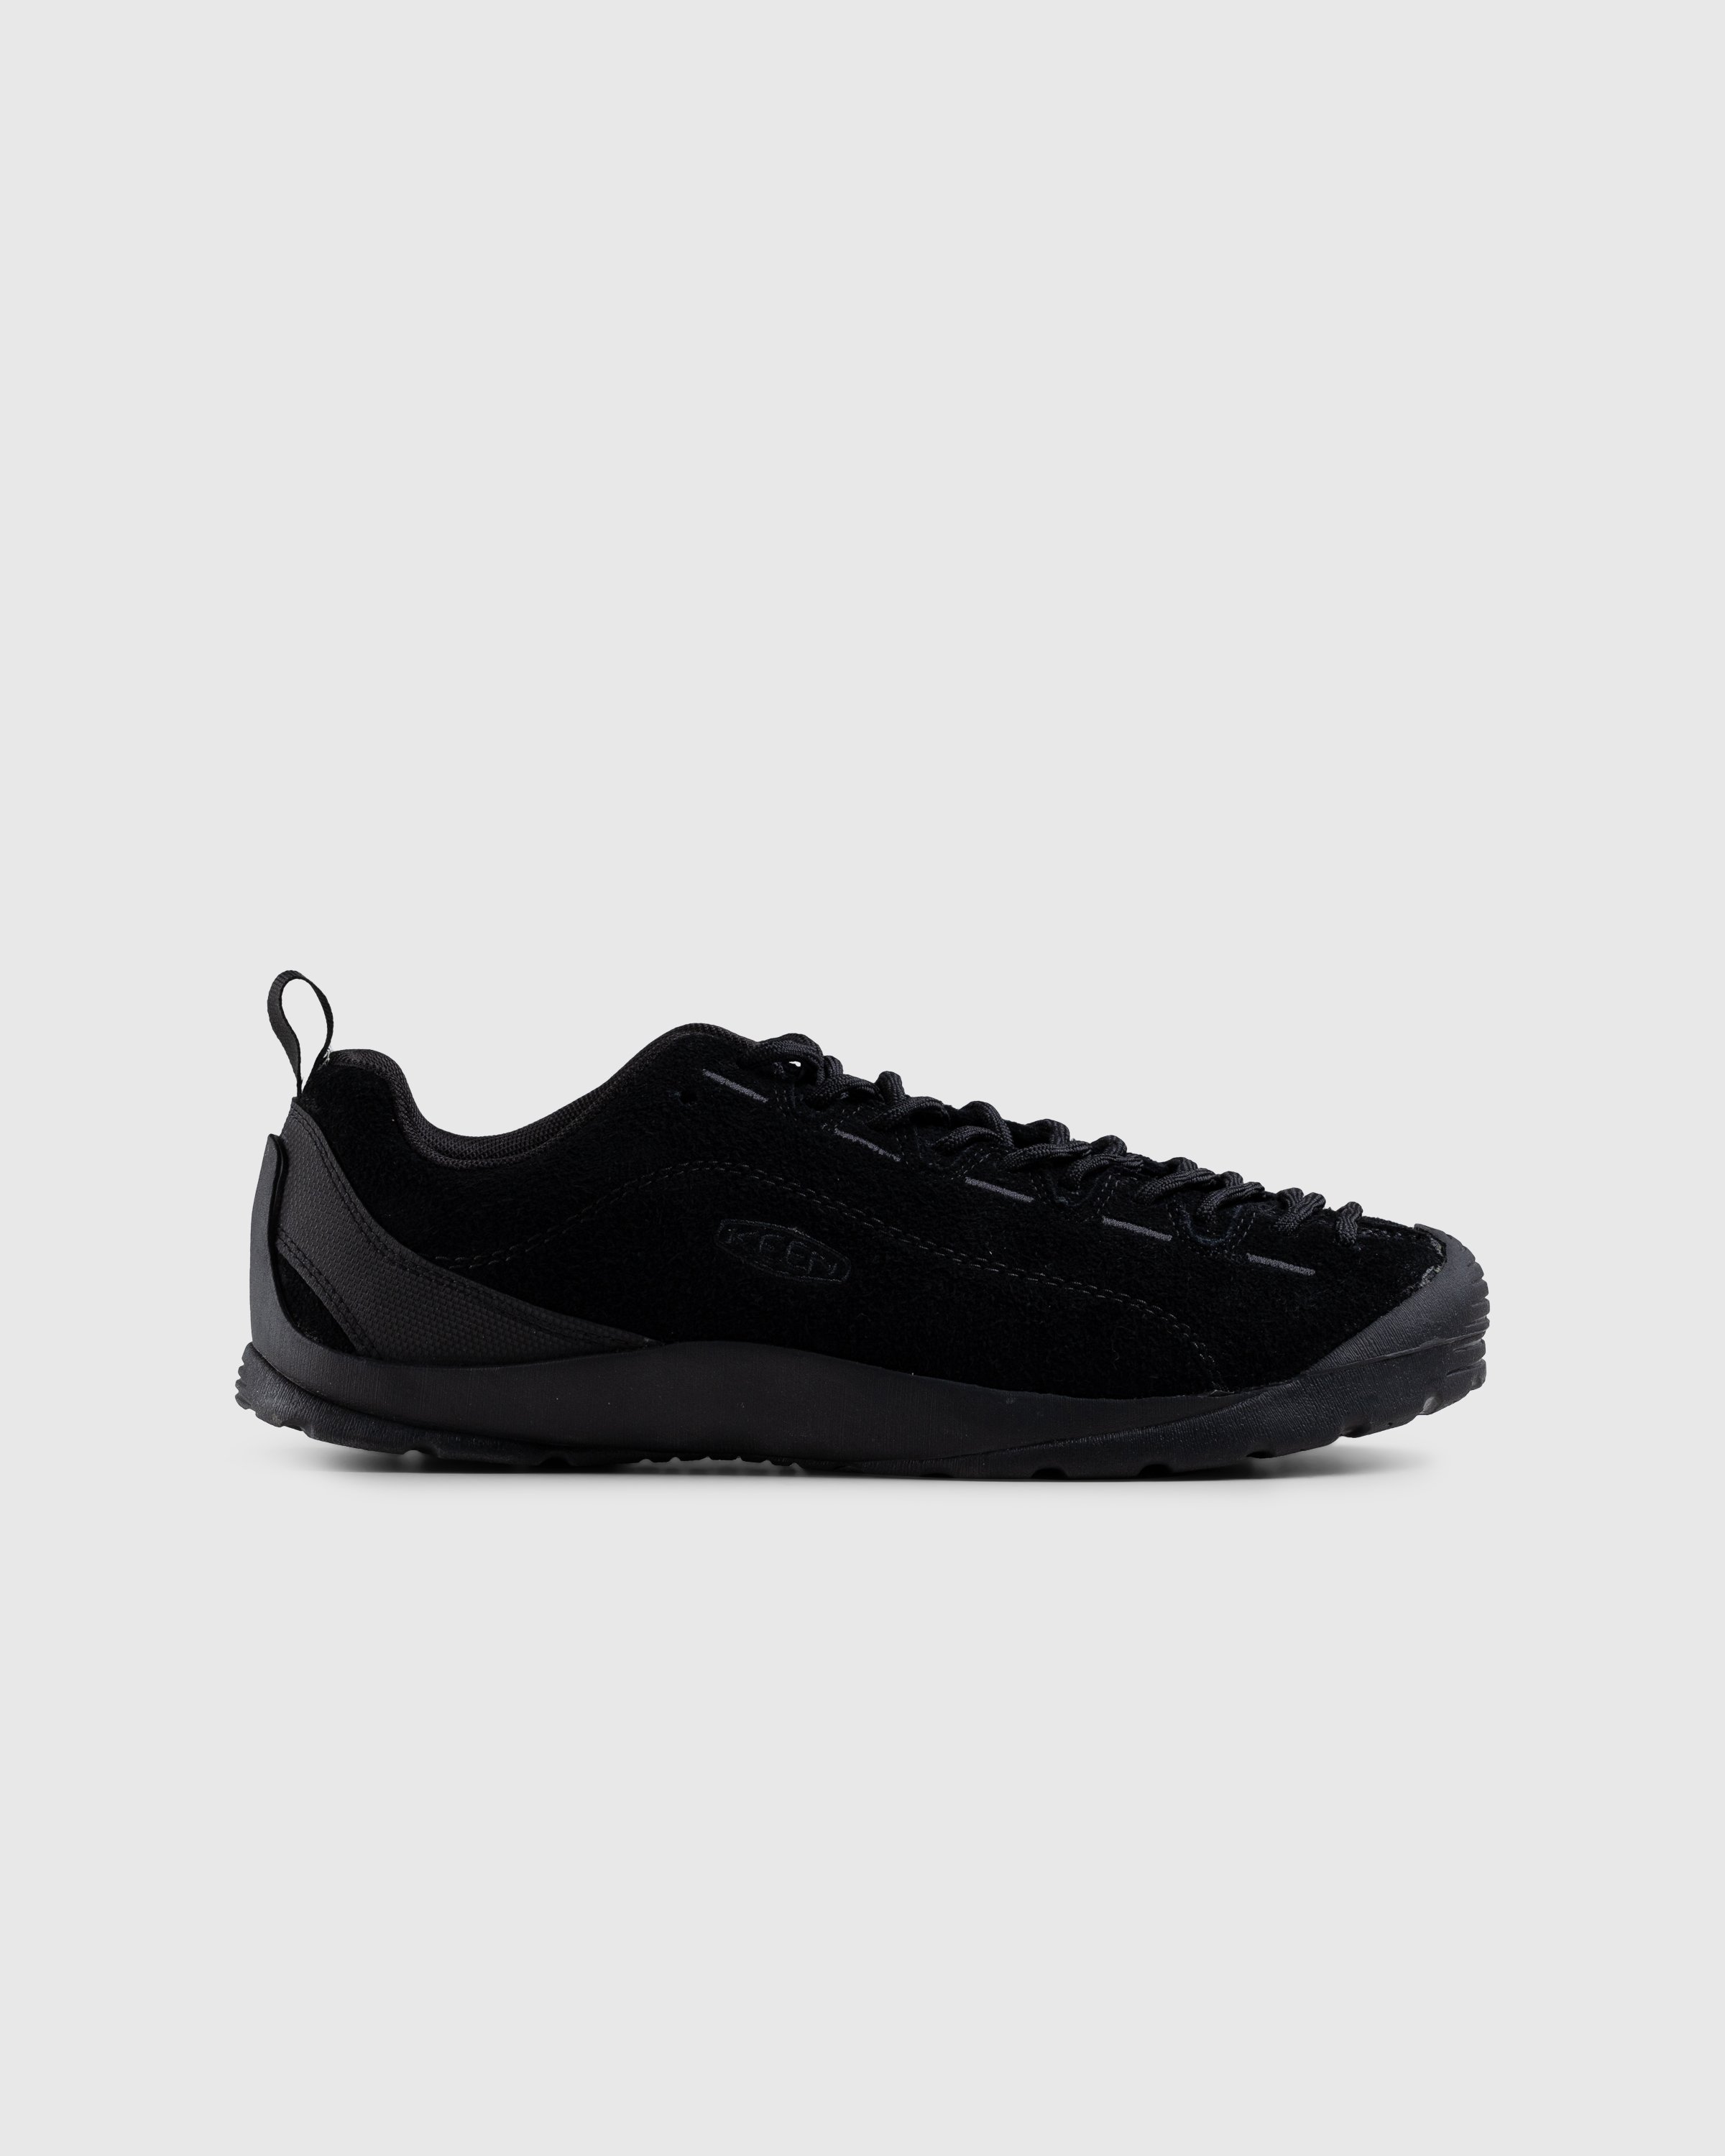 Keen - JASPER Black - Footwear - Black - Image 1